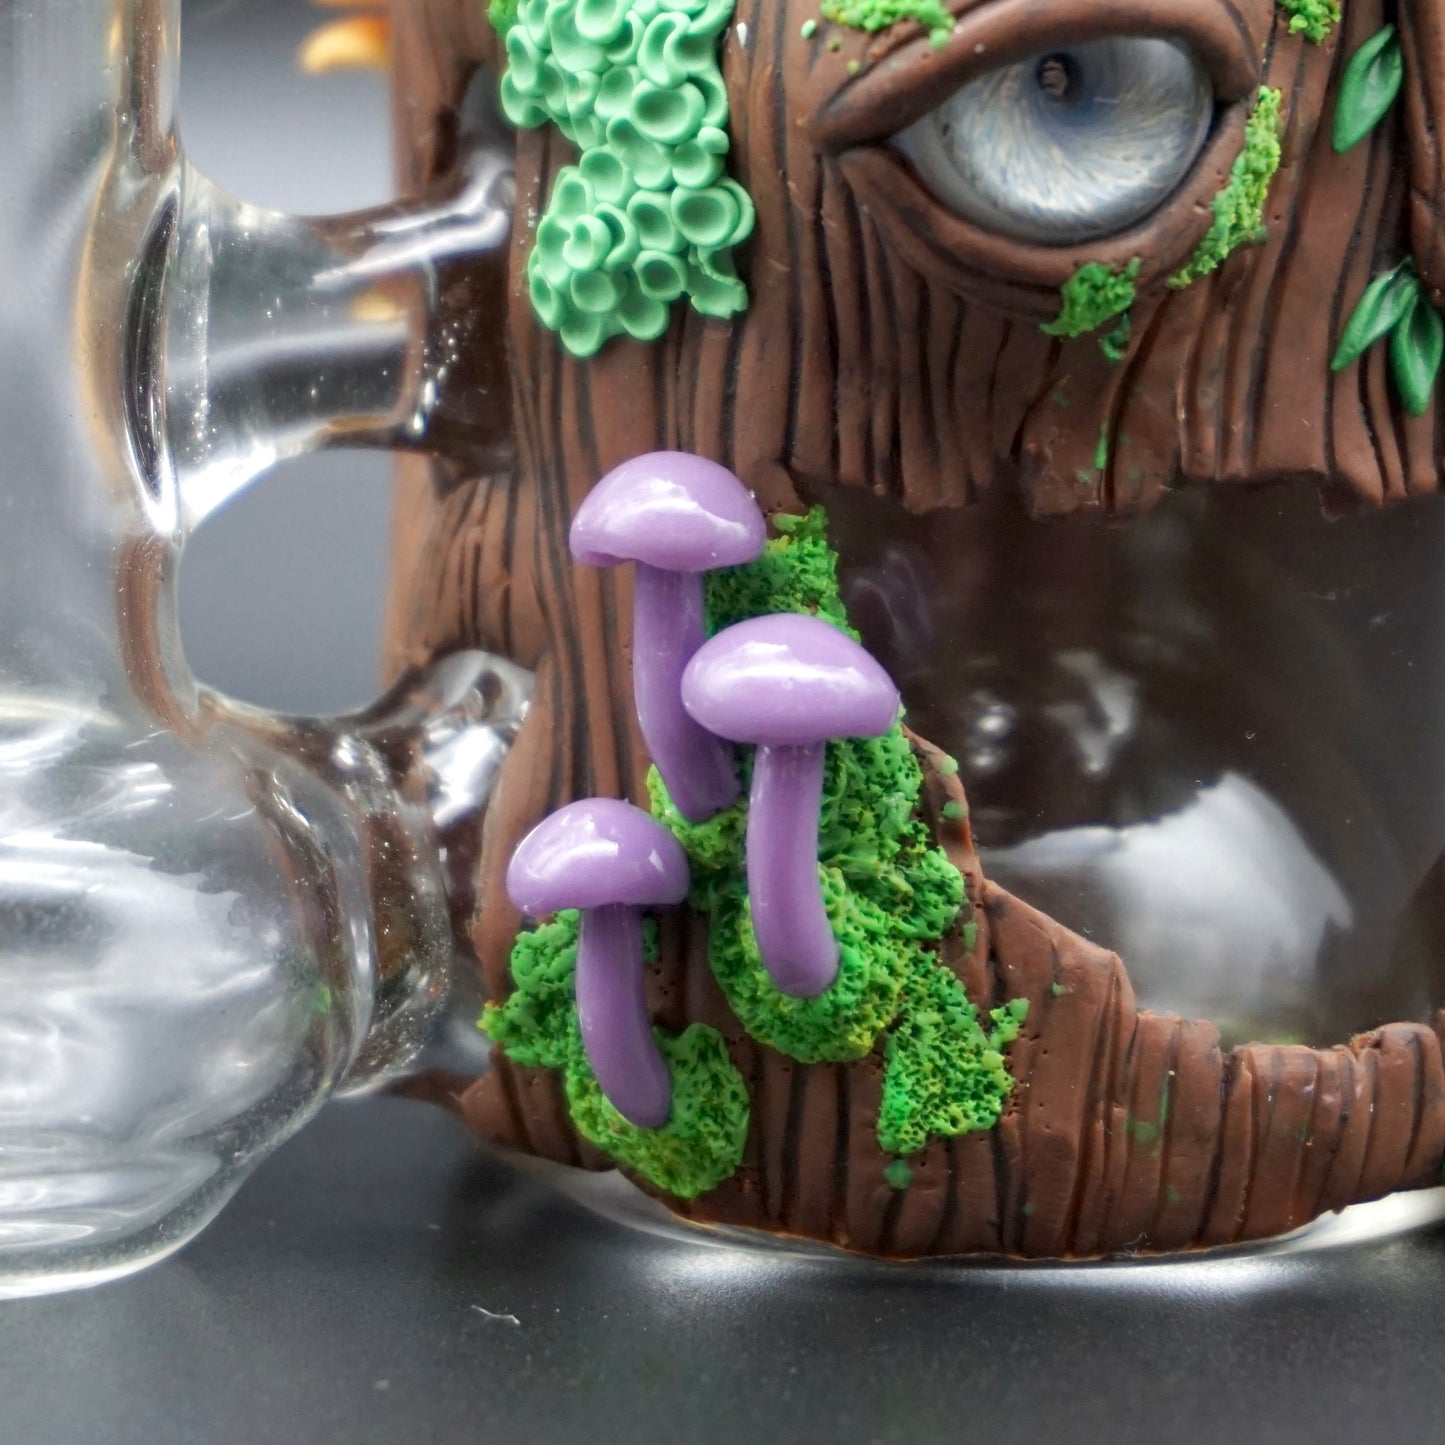 Oom The Mushroom King(set) : Daft Glass + Ambient Glass collab